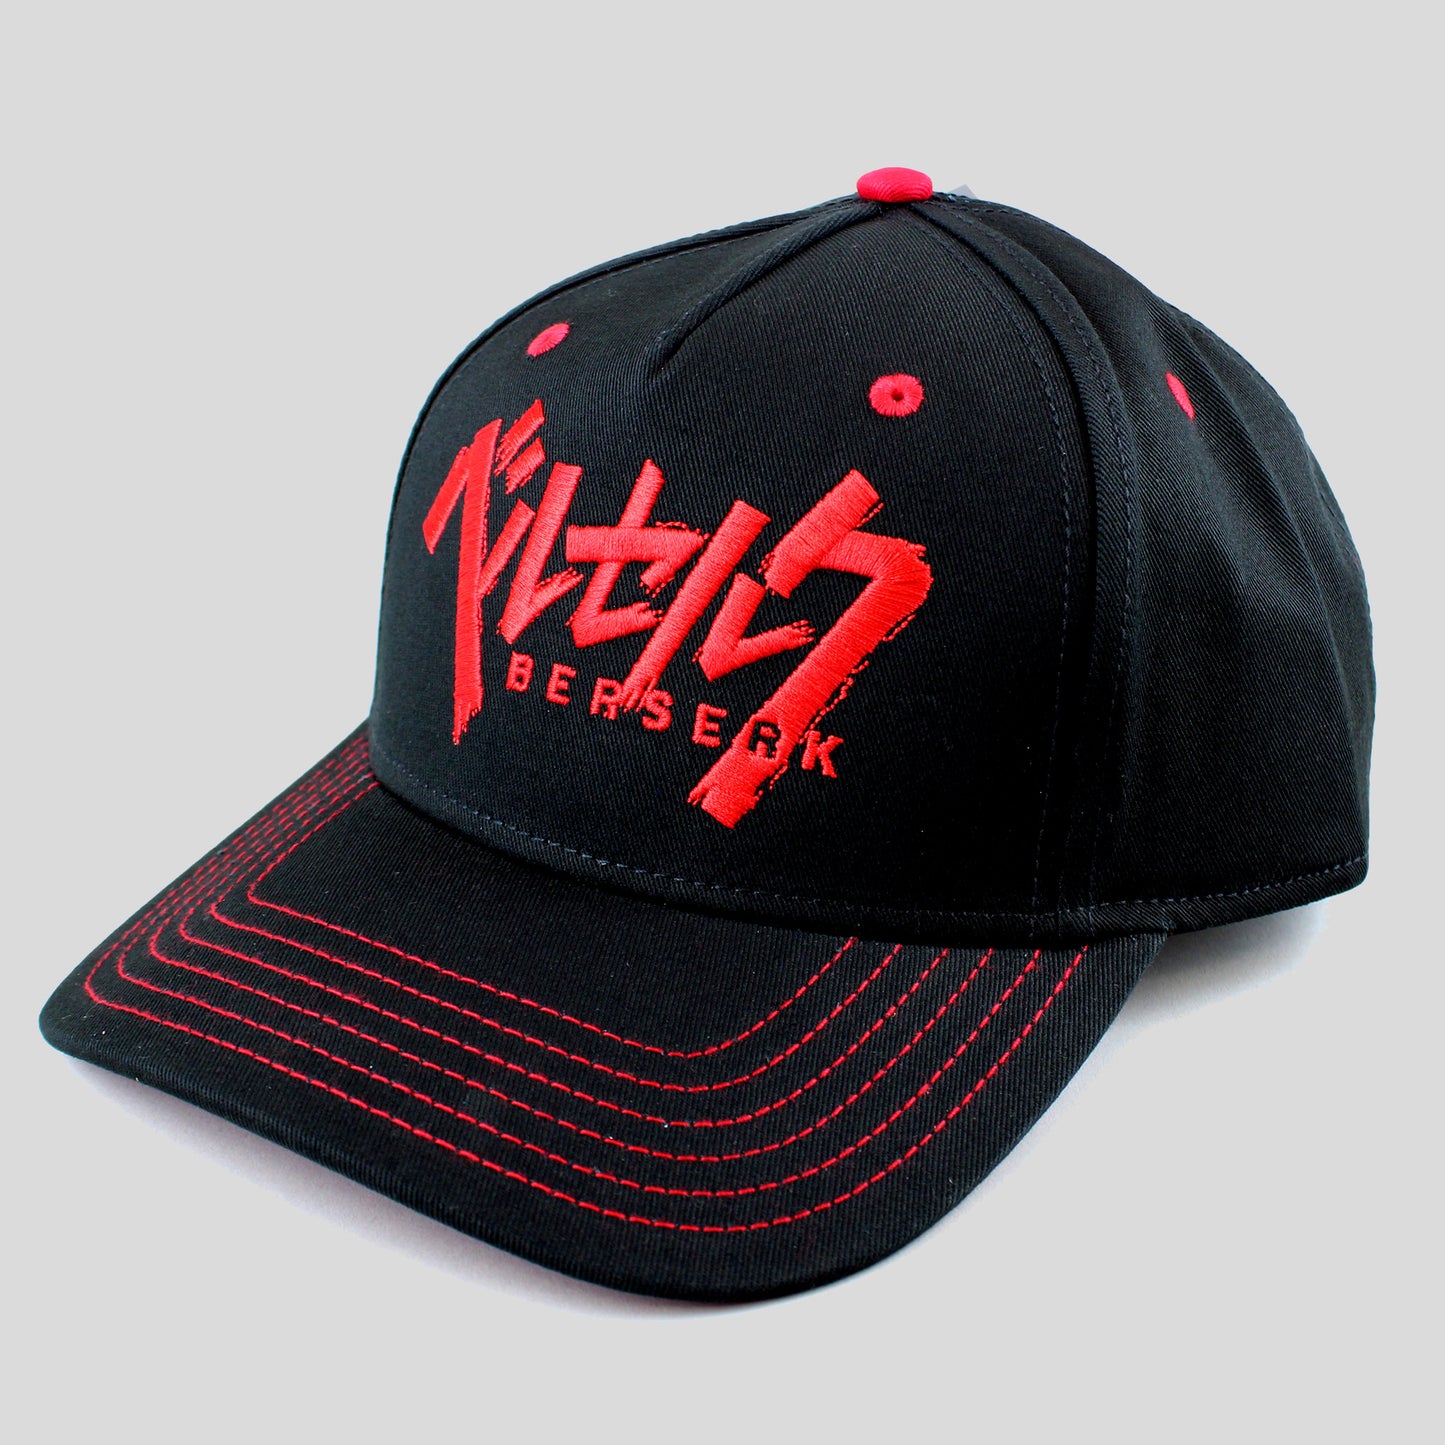 Berserk Logo Embroidered Contrast Snapback Hat